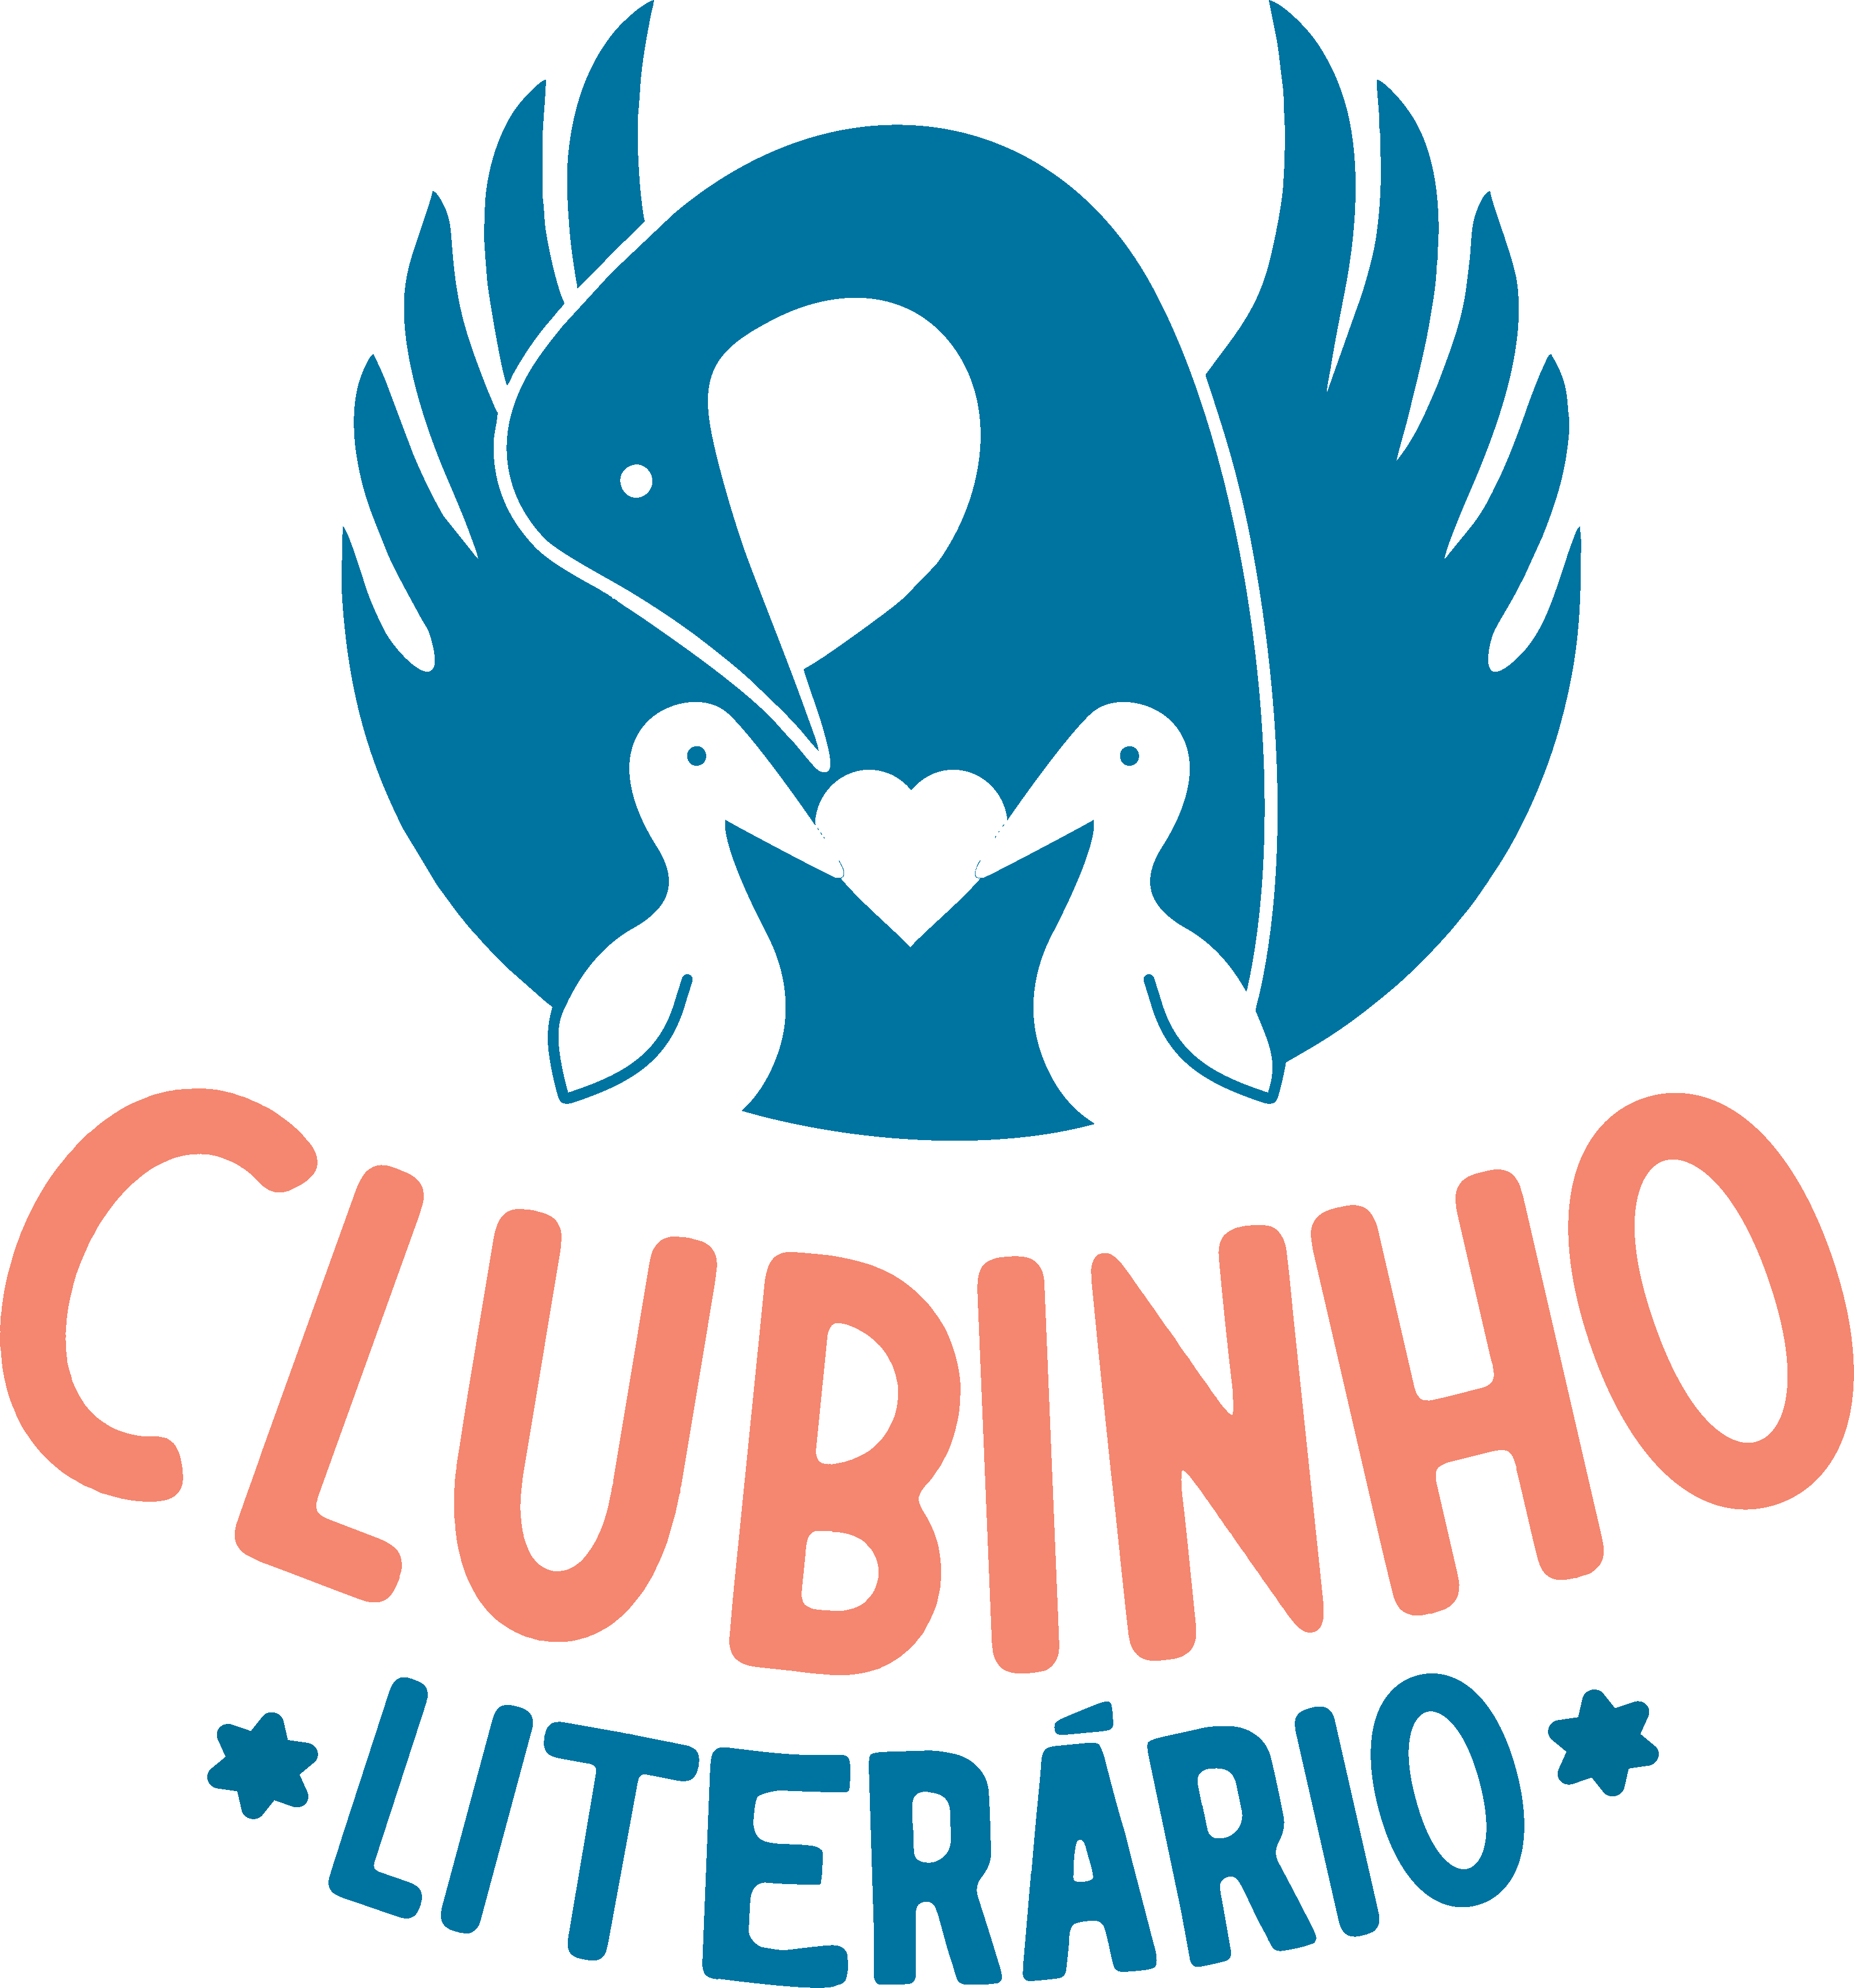 Clubinho Literario